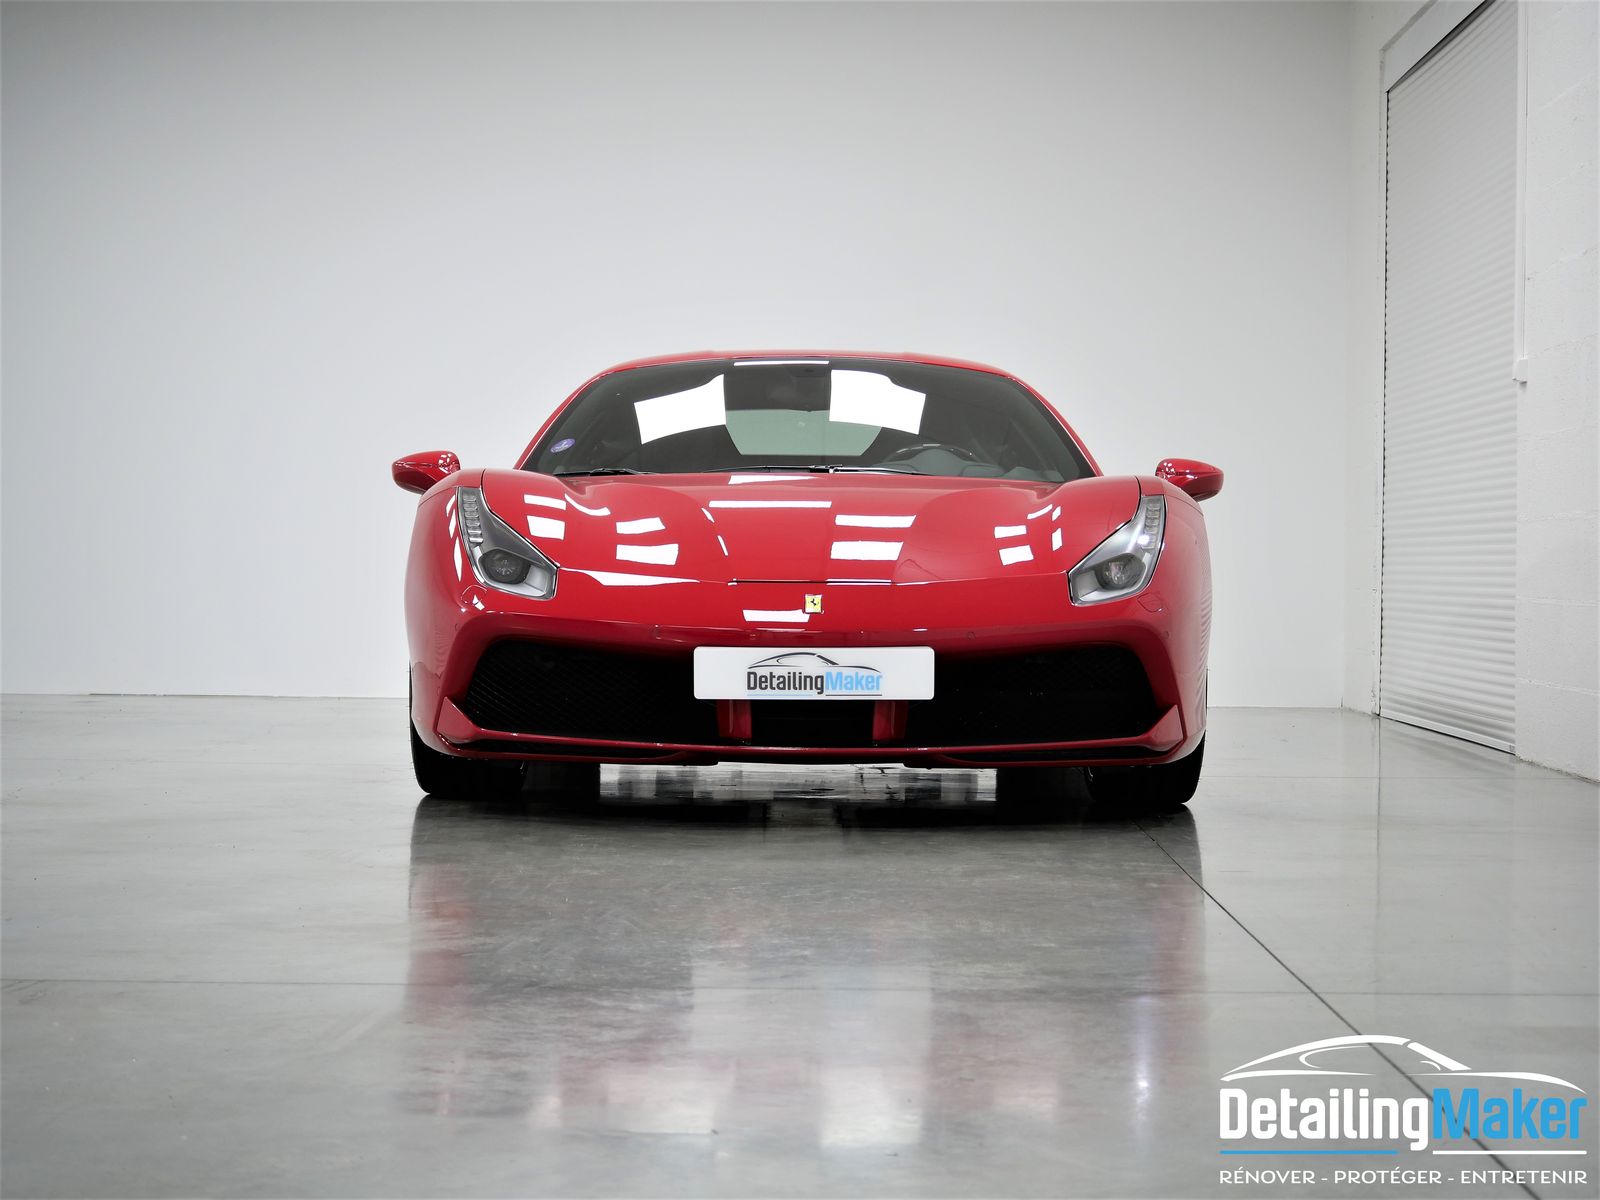 Film de protection carrosserie sur Ferrari 488 GTB